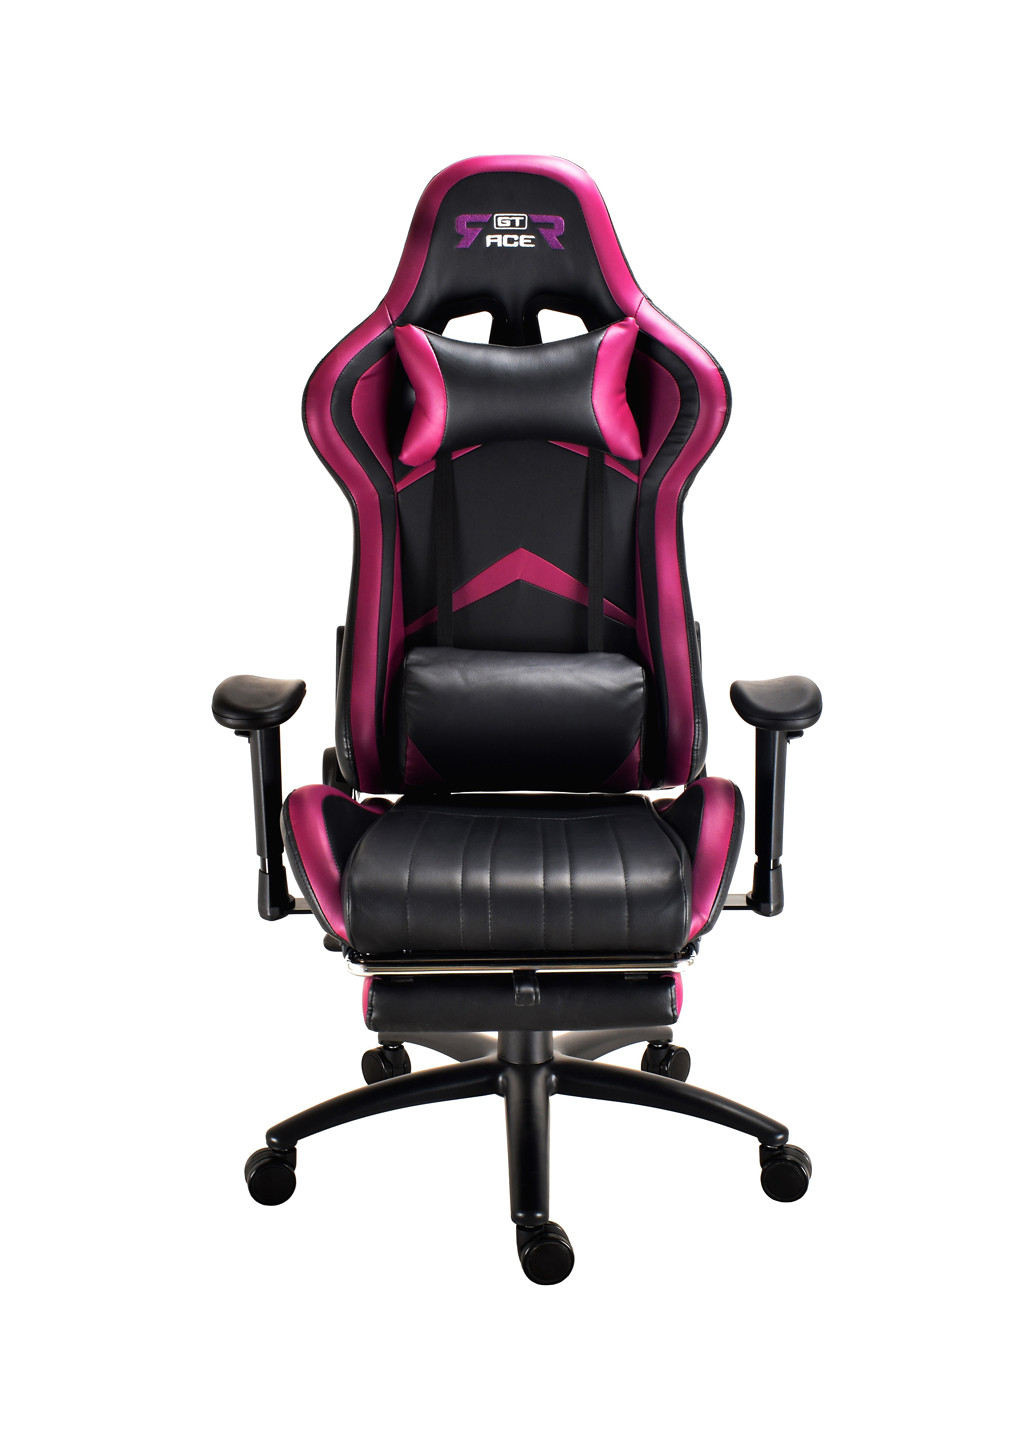 Кресло X-2534-F Black/Violet GT Racer кресло gt racer x-2534-f black/violet (143068492)